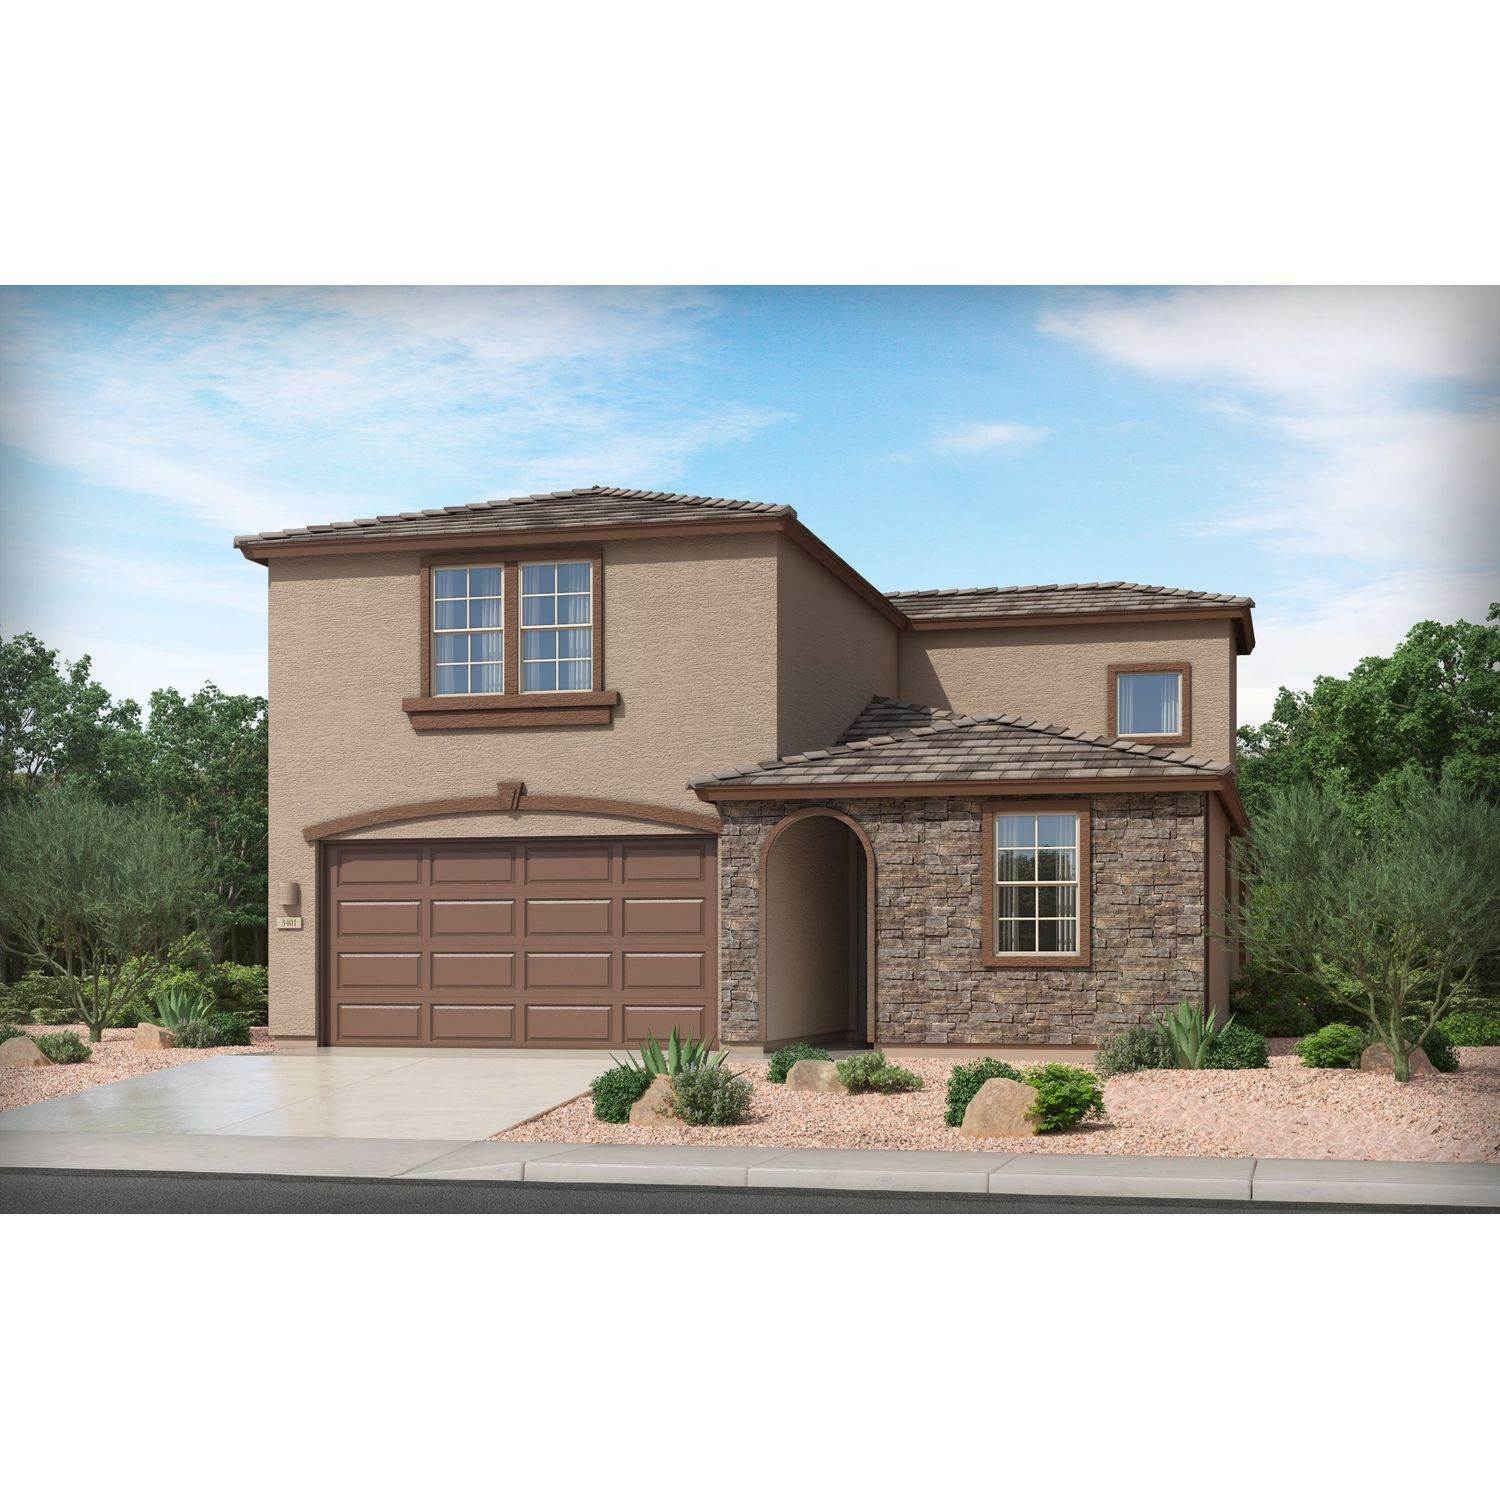 Single Family for Sale at Tucson, AZ 85747